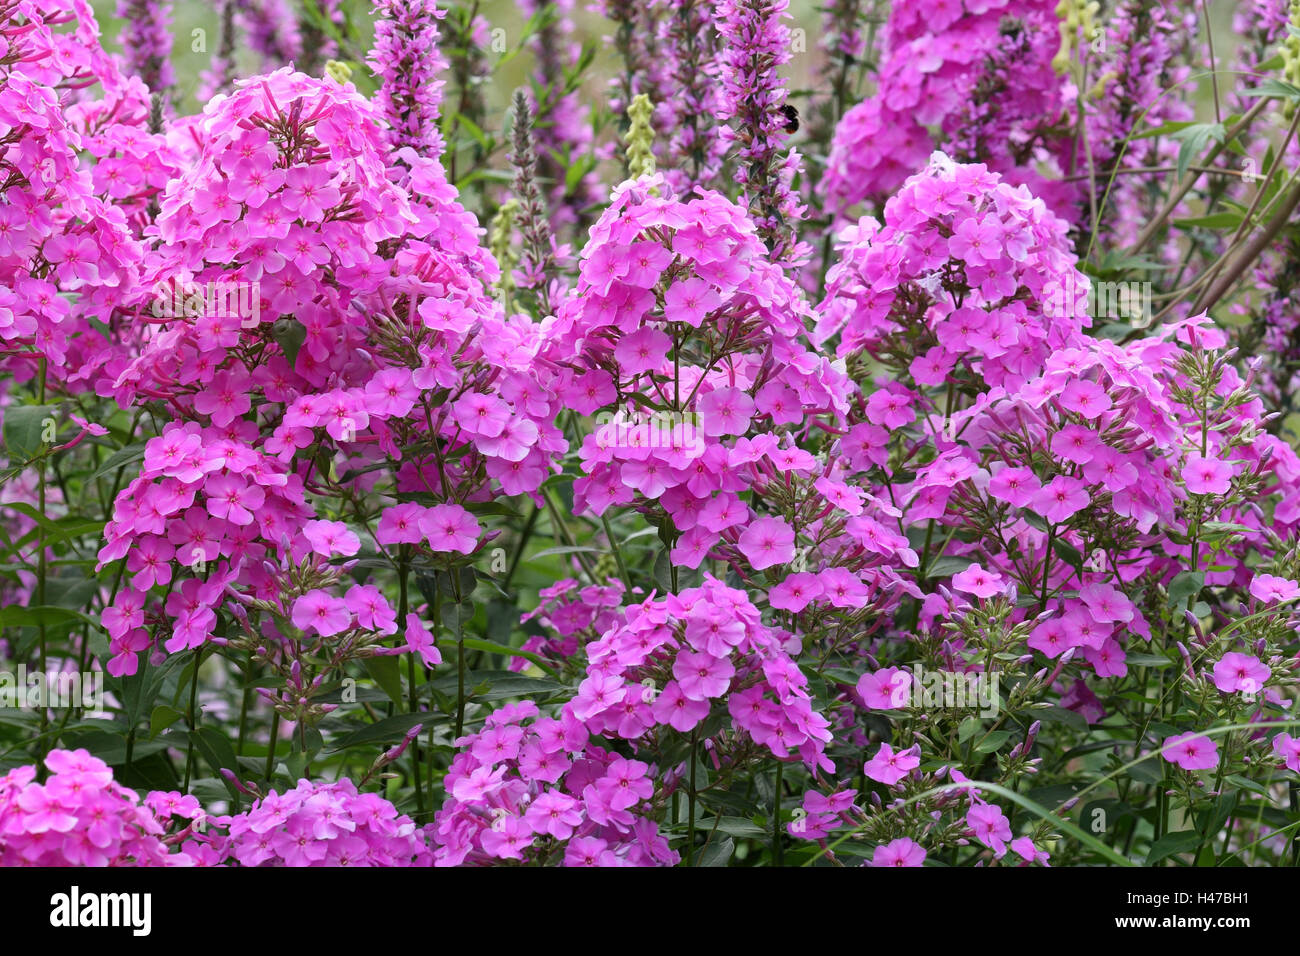 Garden flowers, phlox, Stock Photo